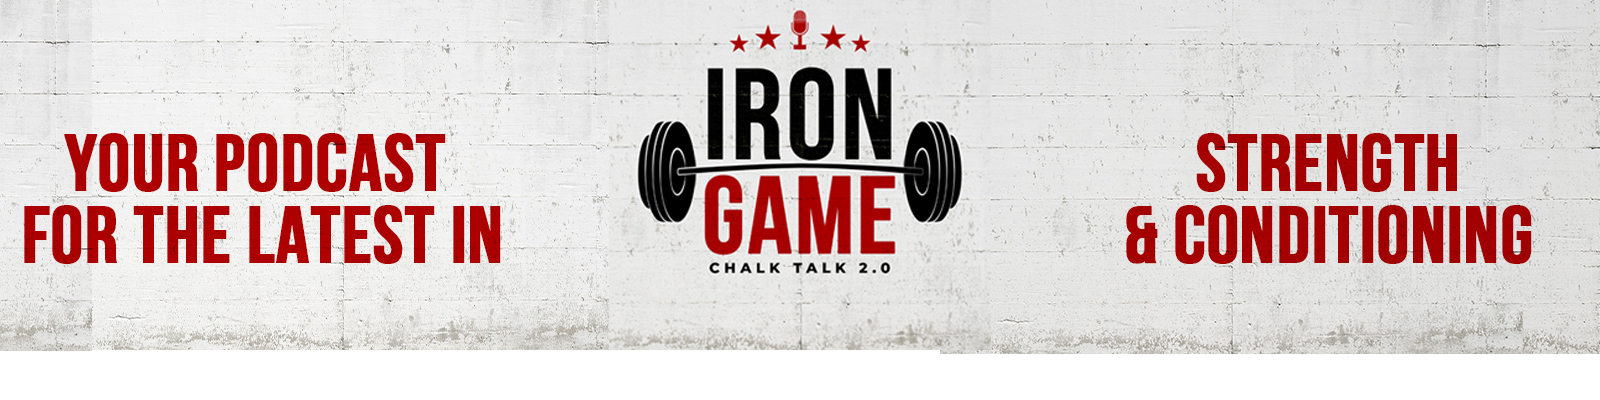 Iron Game Chalk Talk 2.0